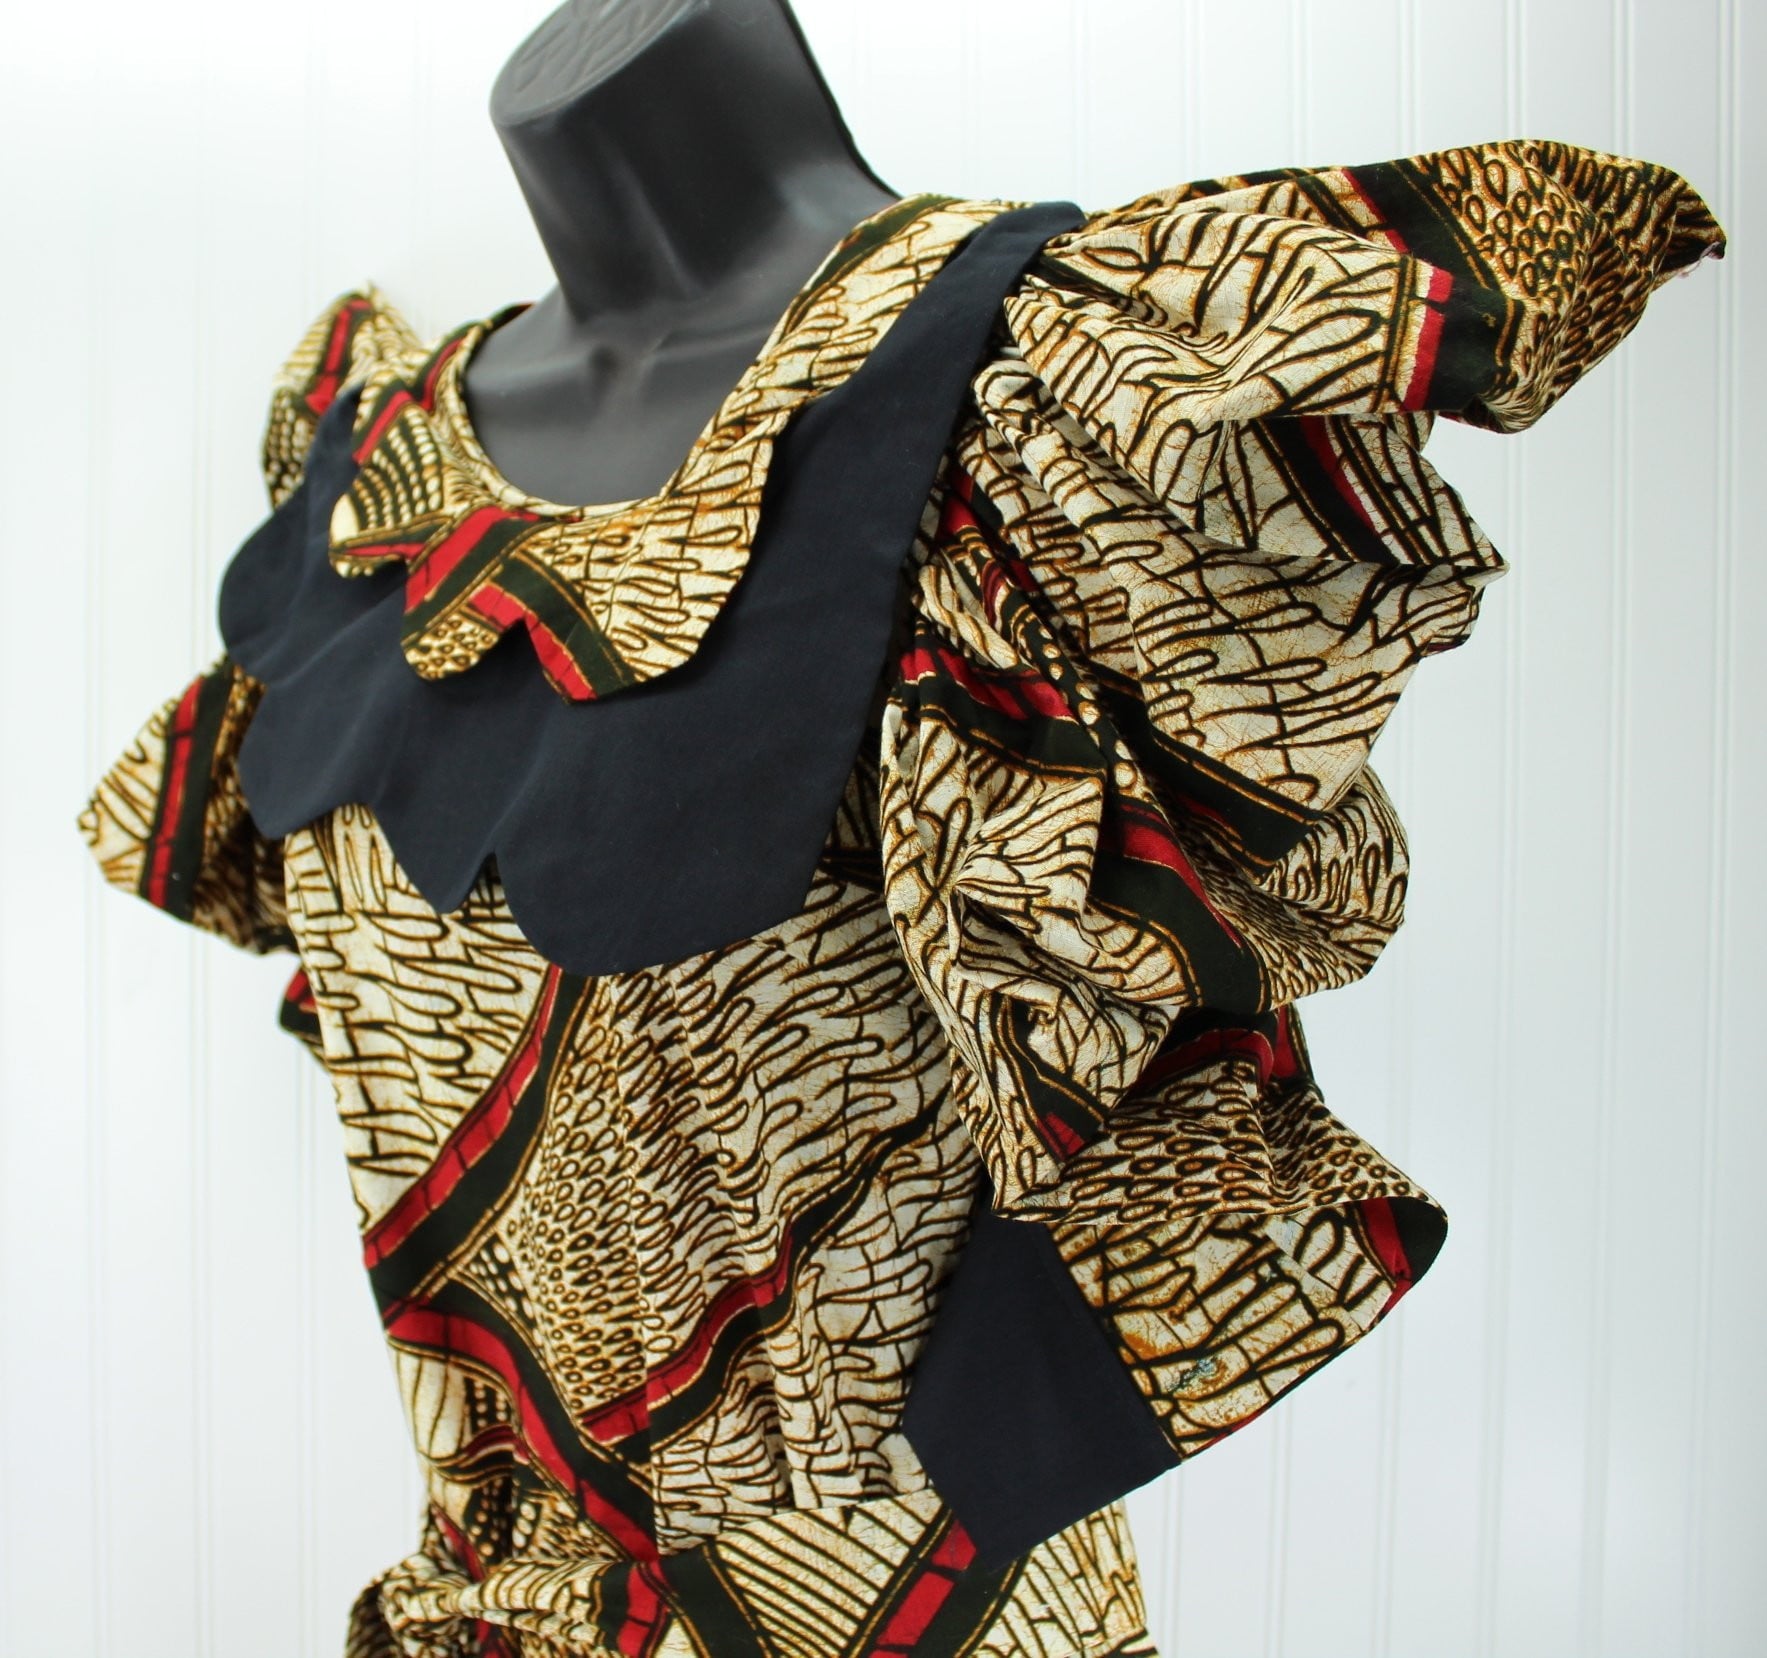 Vintage 1980s West Africa Dress Cotton Batik 2 Piece Tie Belt Custom Queen's Shop Kno Nigeria print batik older fabric